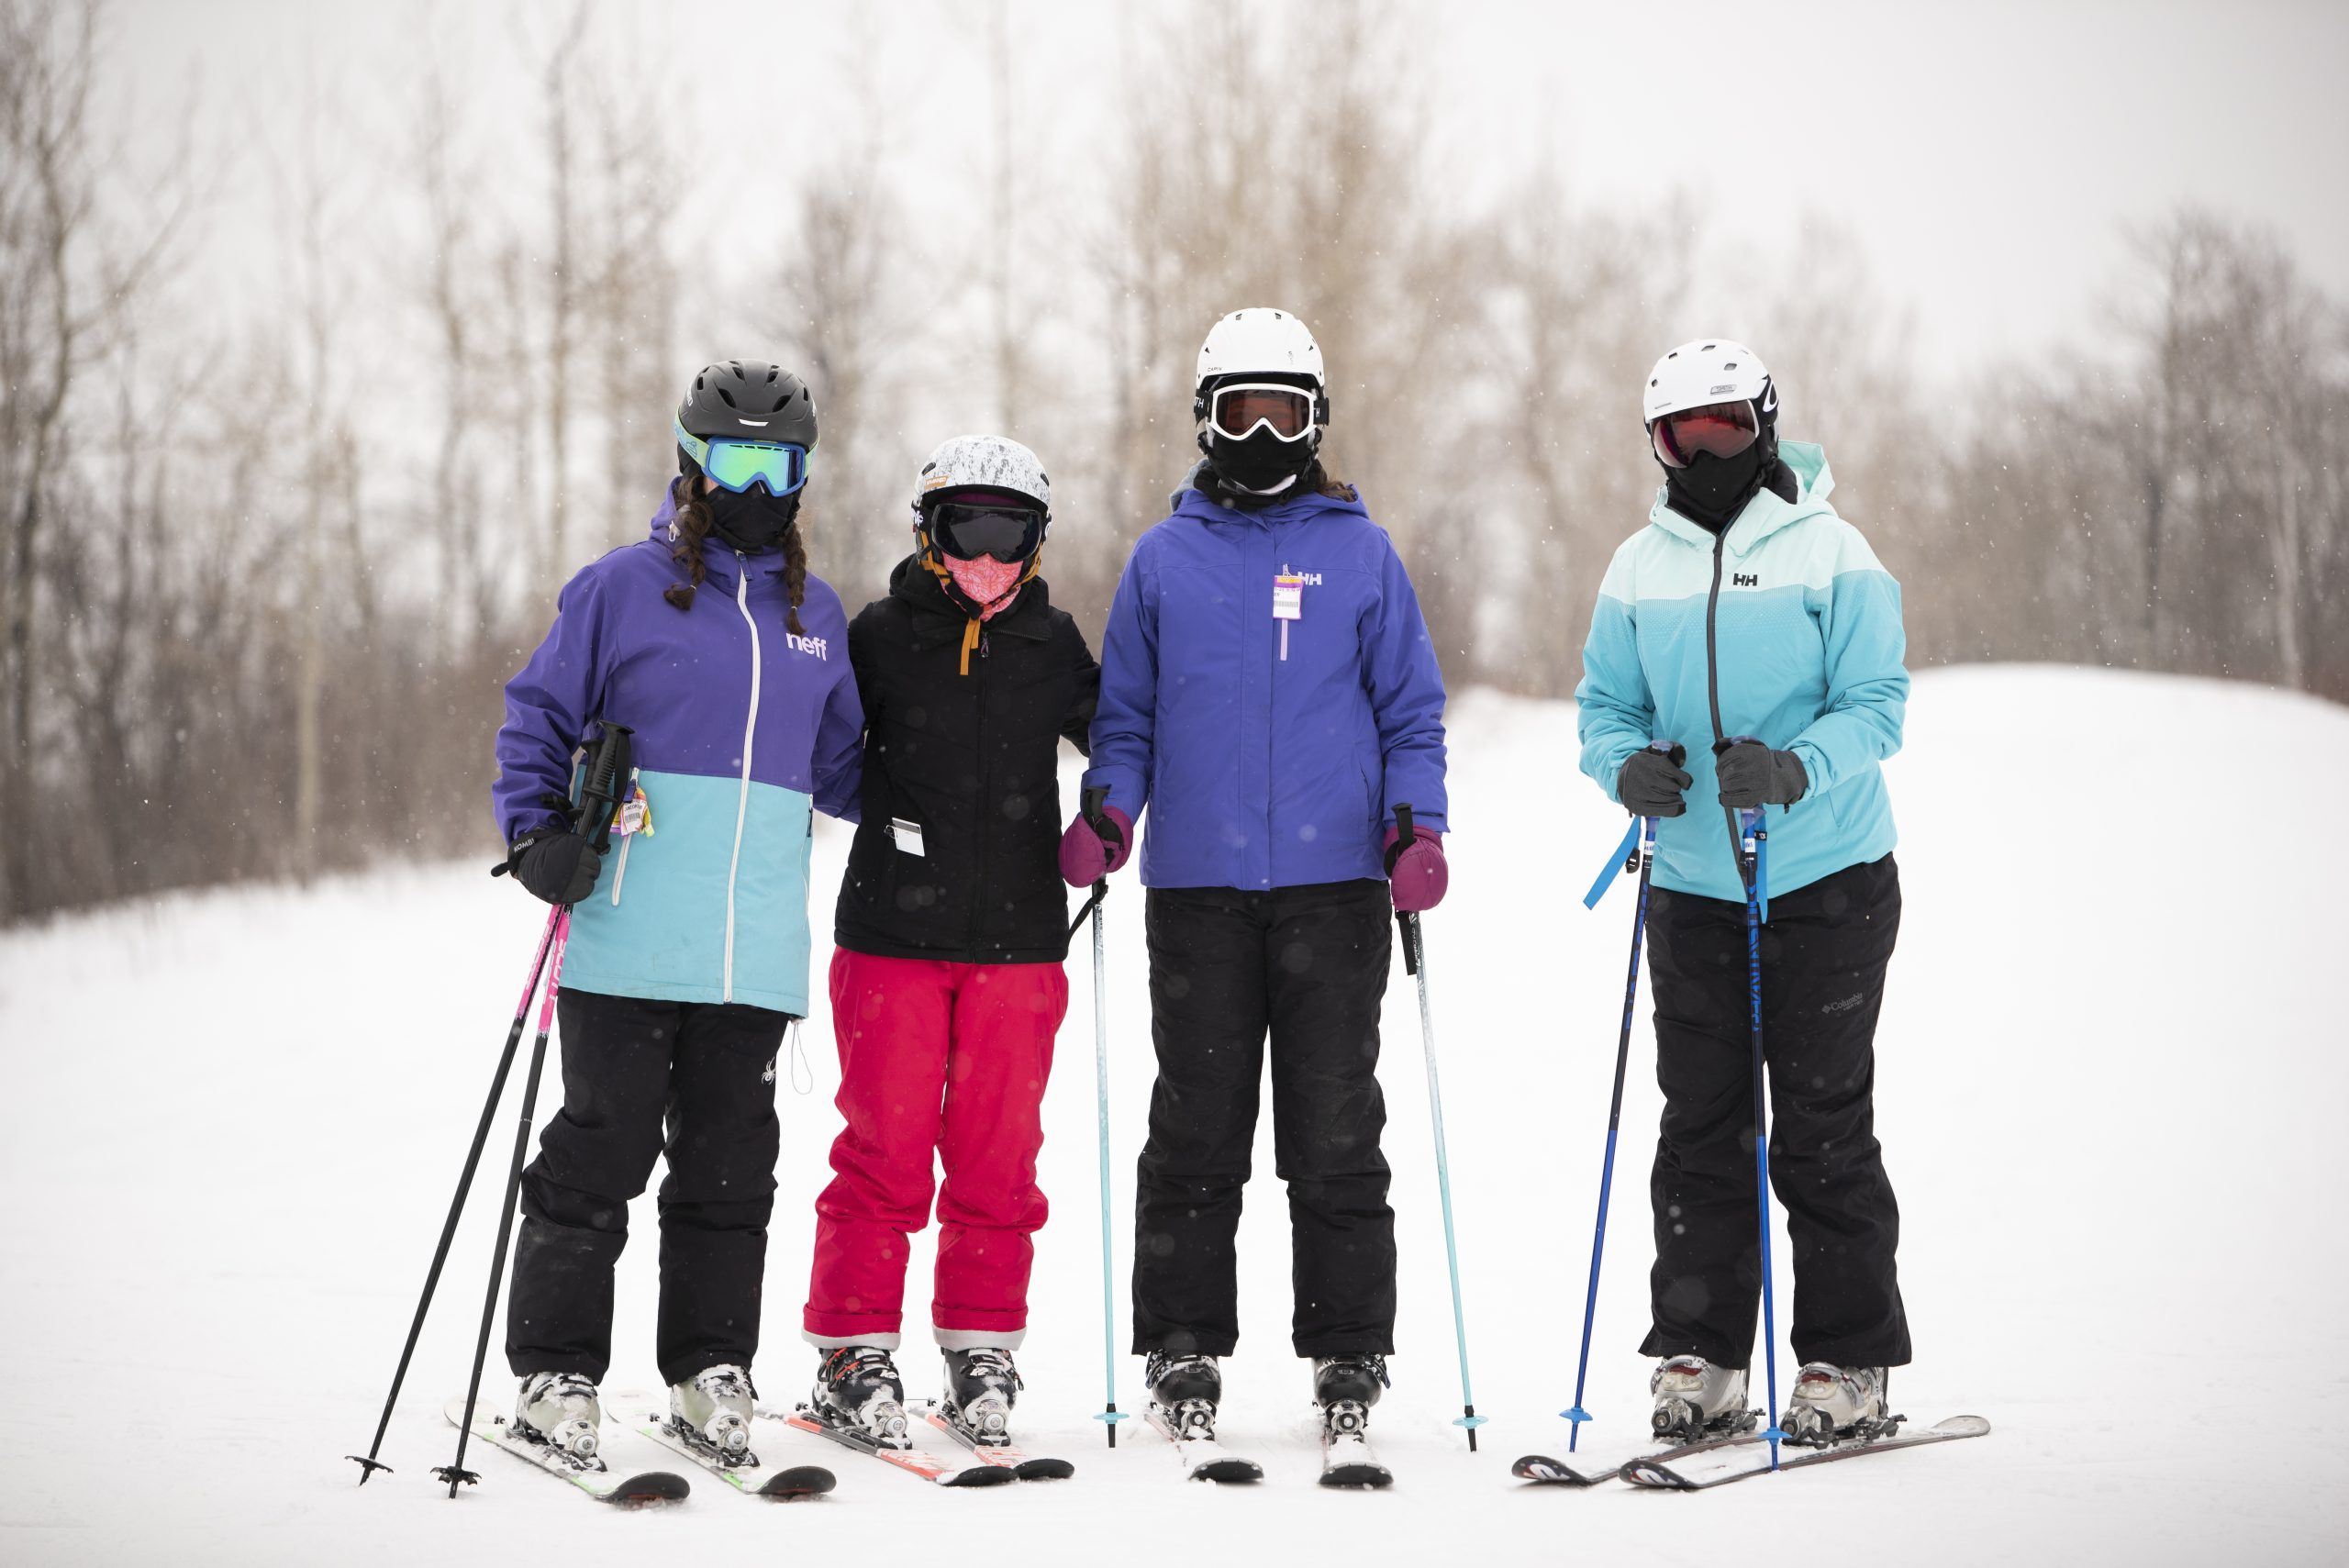 Group of people skiing